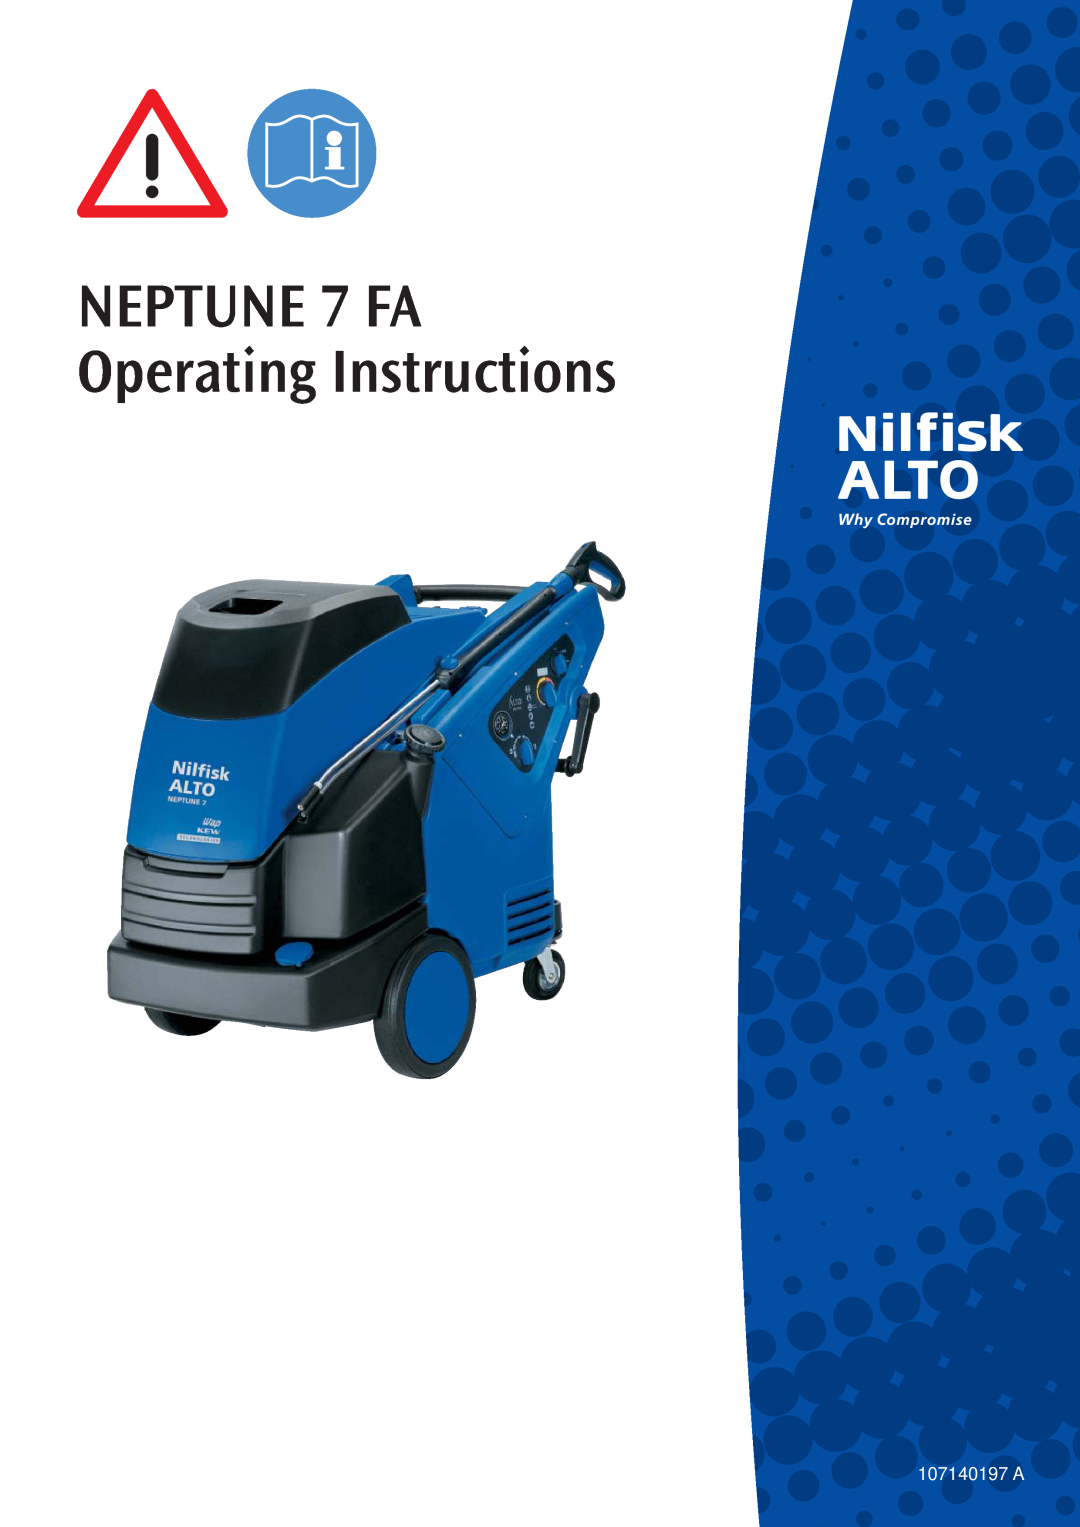 Nilfisk-ALTO manual NEPTUNE 7 FA Operating Instructions, 107140197 A 